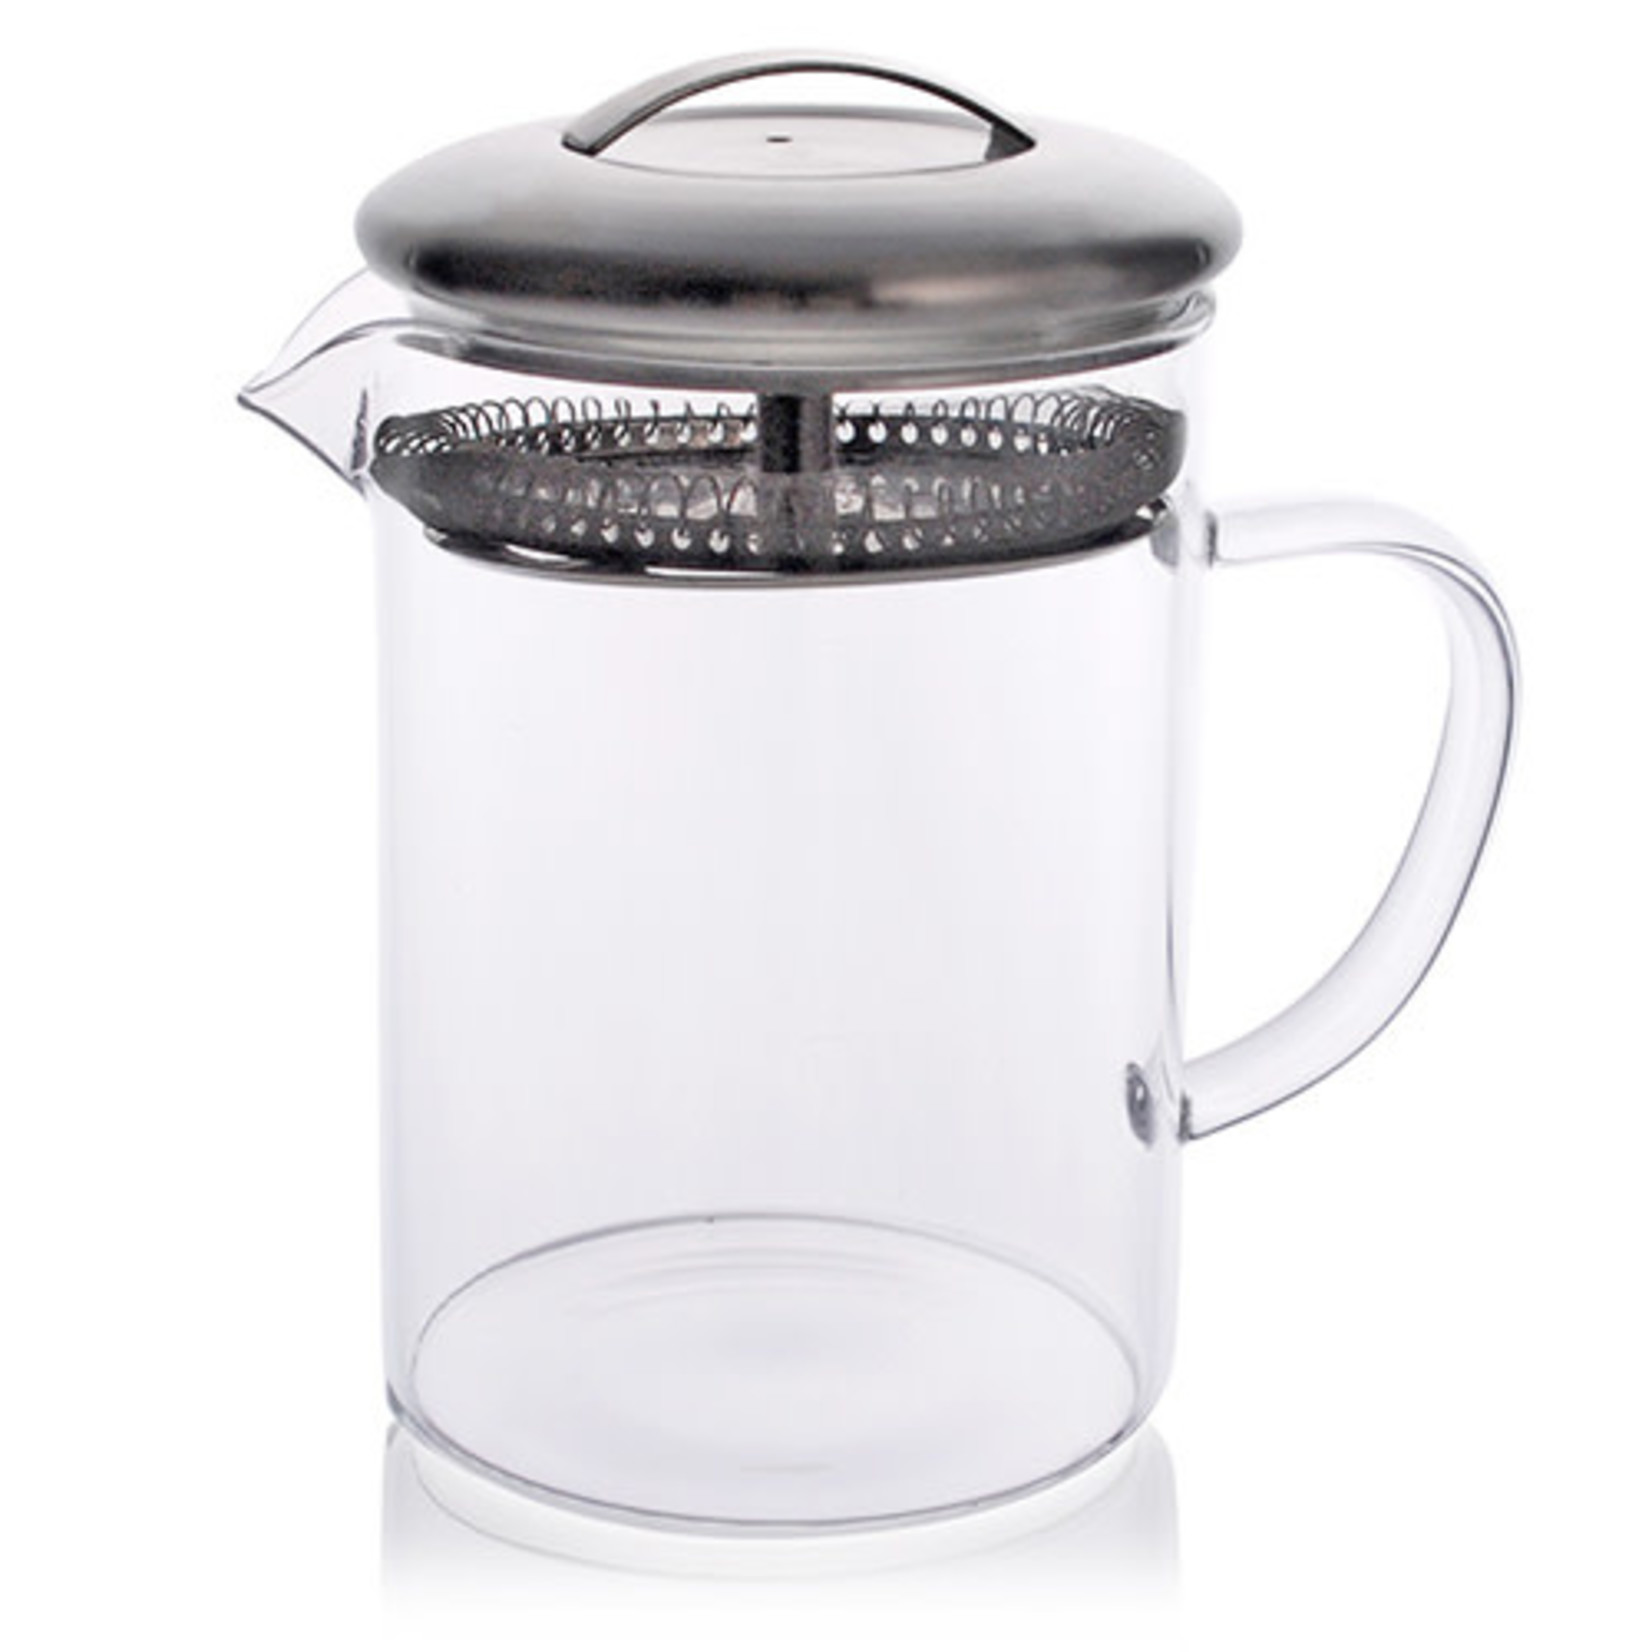 Tea Concept Teapot / Mug Glass w/Strainer Lid 550ml - JQ550-FP1